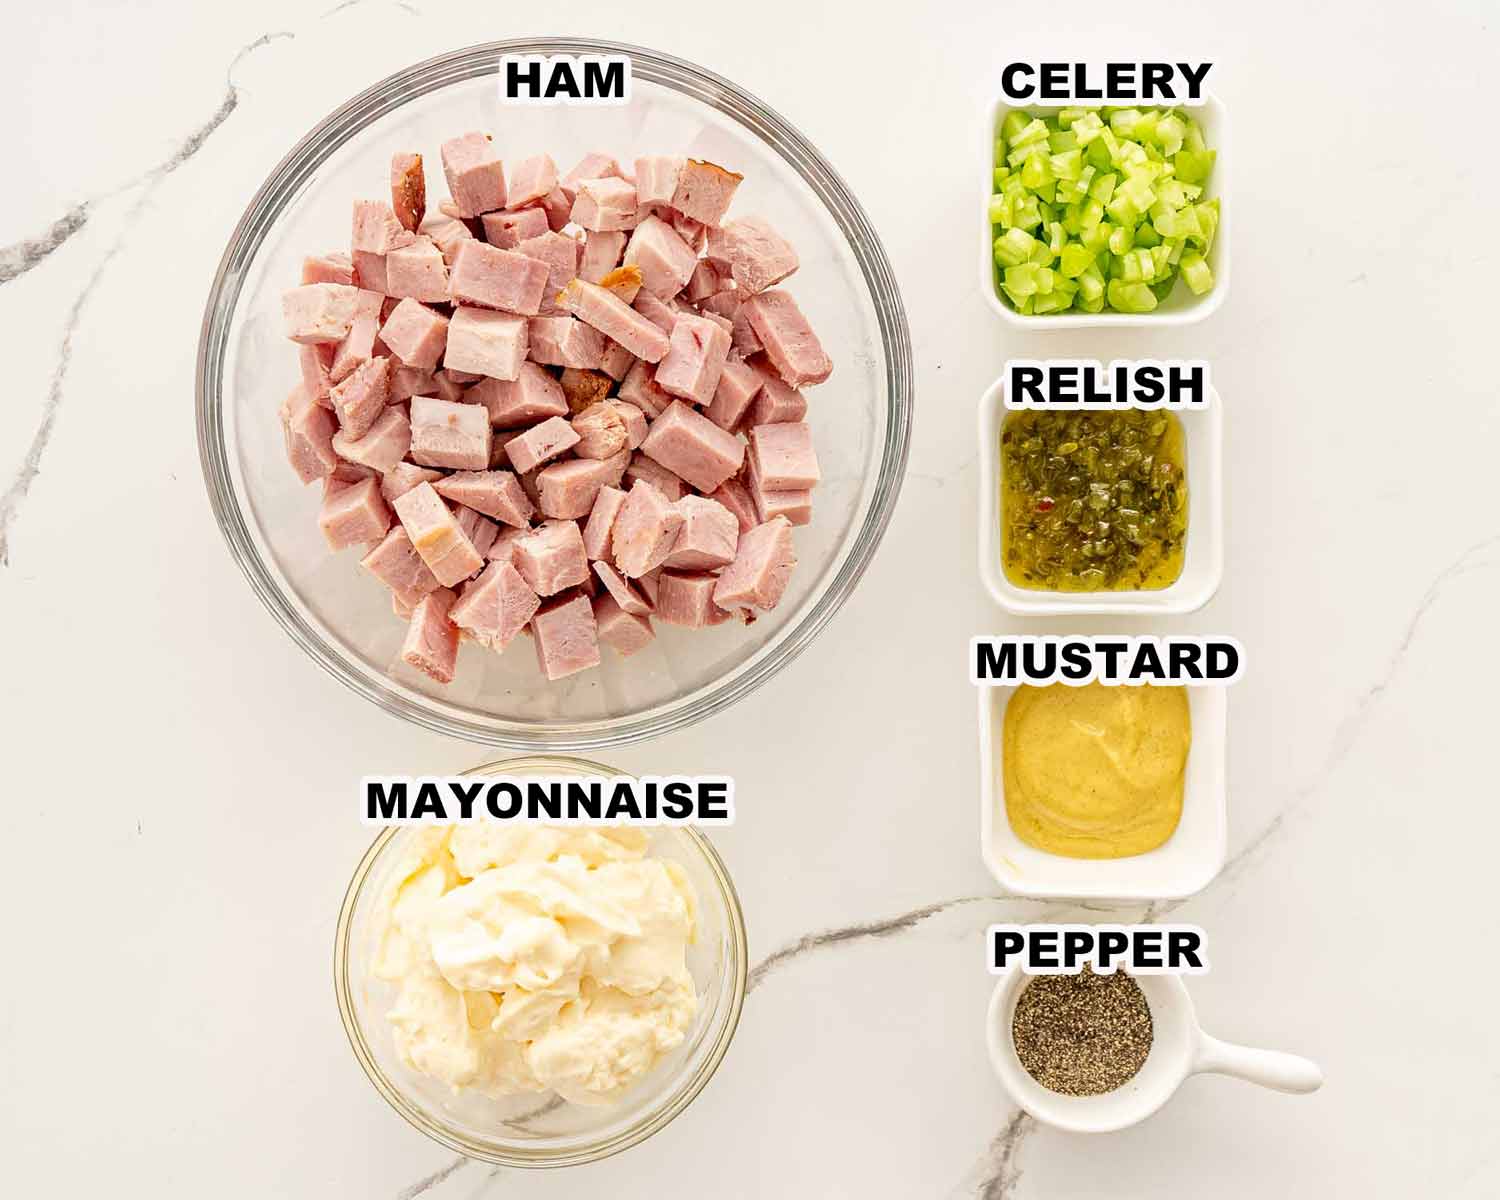 ingredients needed to make ham salad.